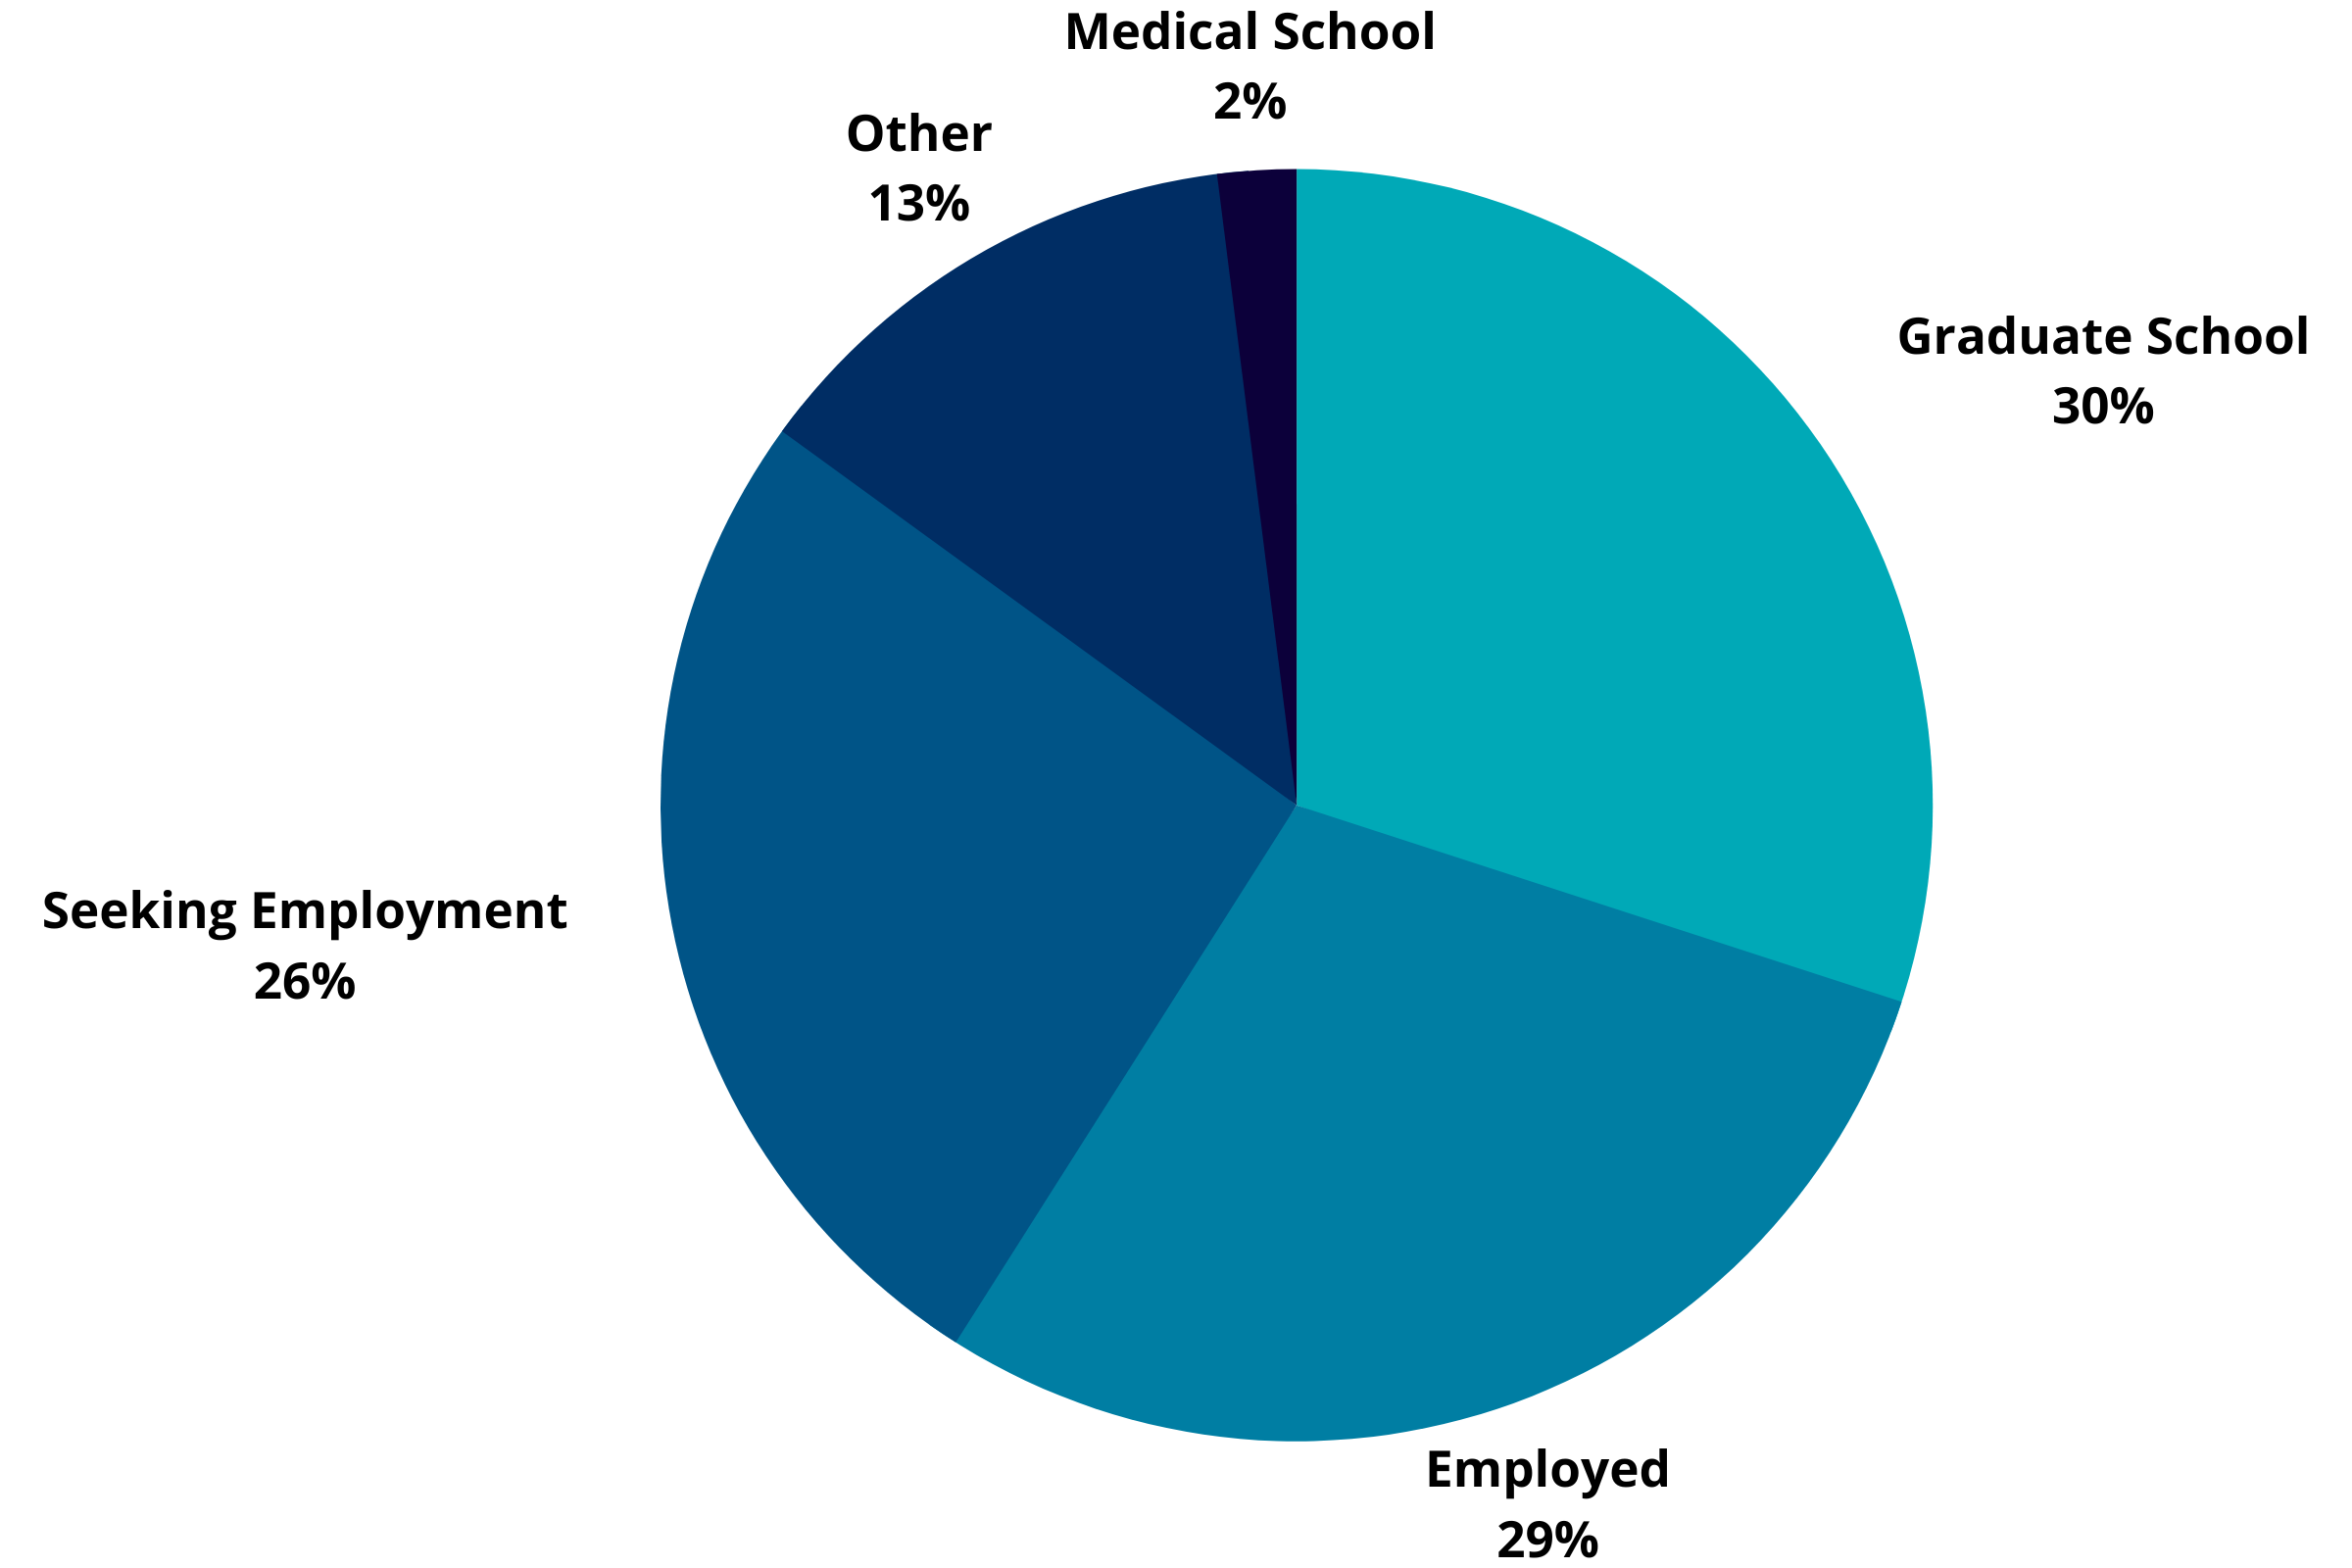 Physics Graduation Outcomes: Graduate School 30%, Employer 295, Seeking Employment 26%, Medical School 2%, Other 13%